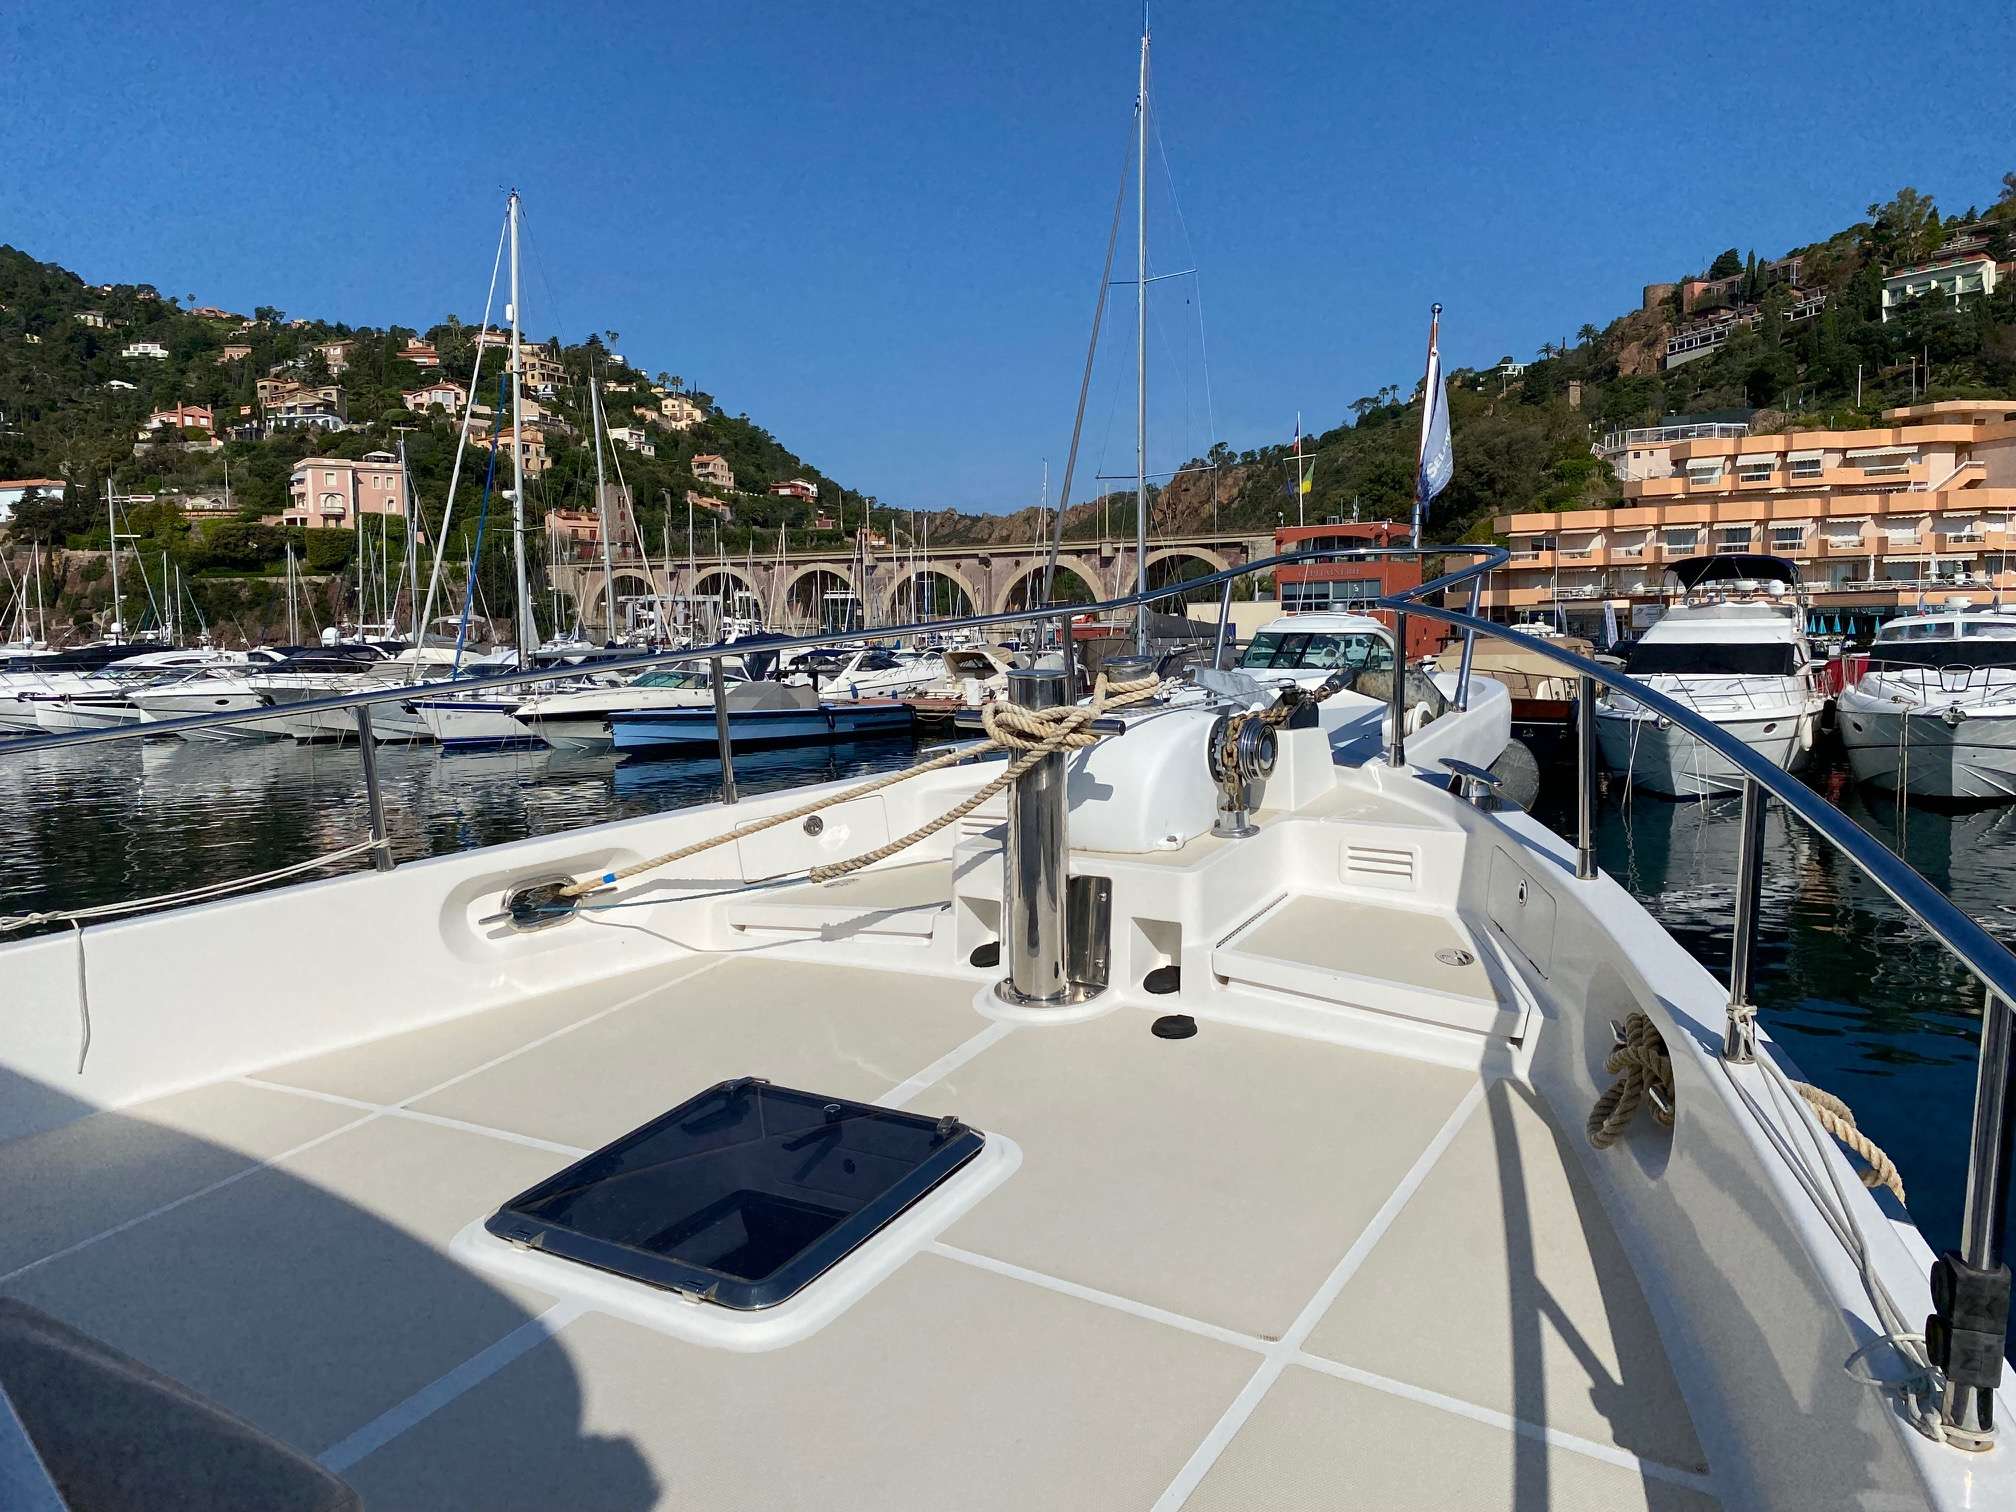 NOMADES - Yacht Charter Monaco & Boat hire in Fr. Riviera, Corsica & Sardinia 4